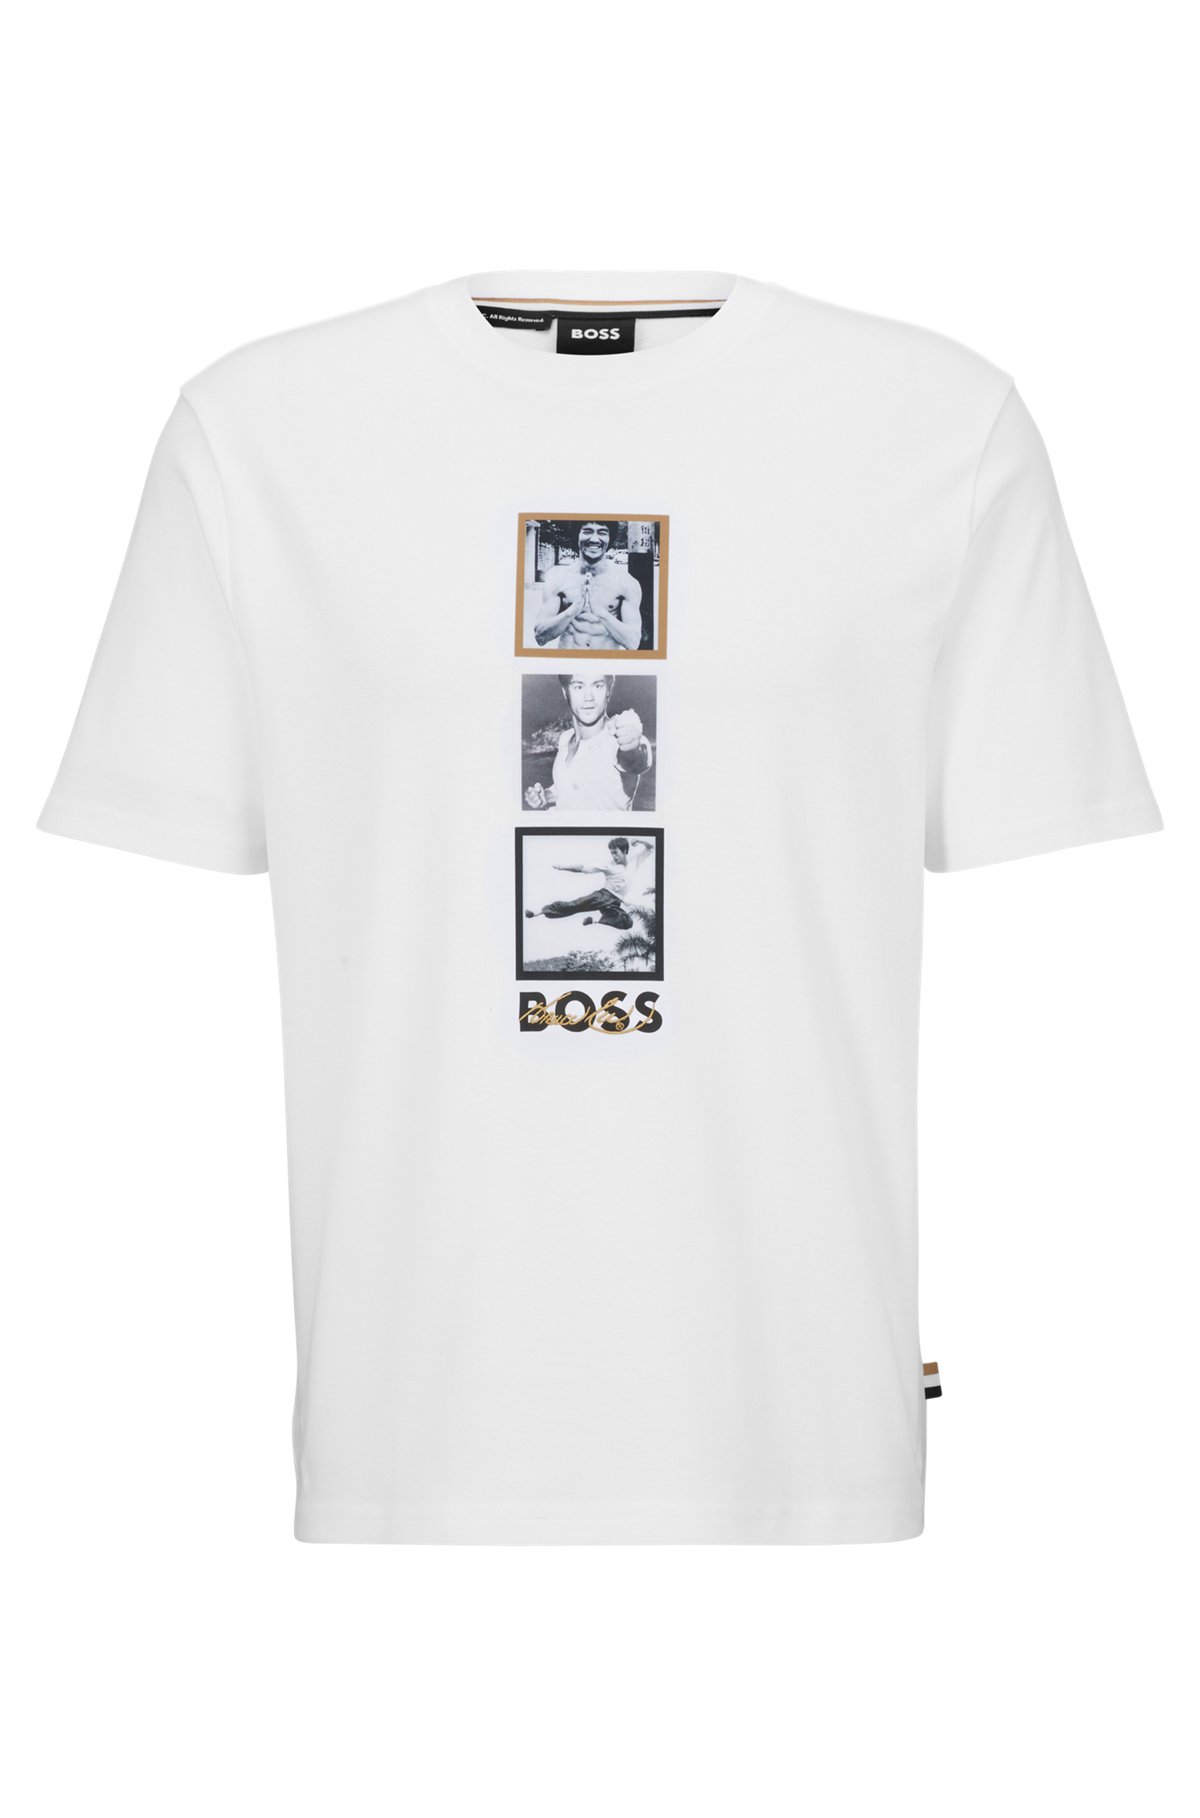 Футболка унисекс BOSS x Bruce Lee с особым рисунком, Белый